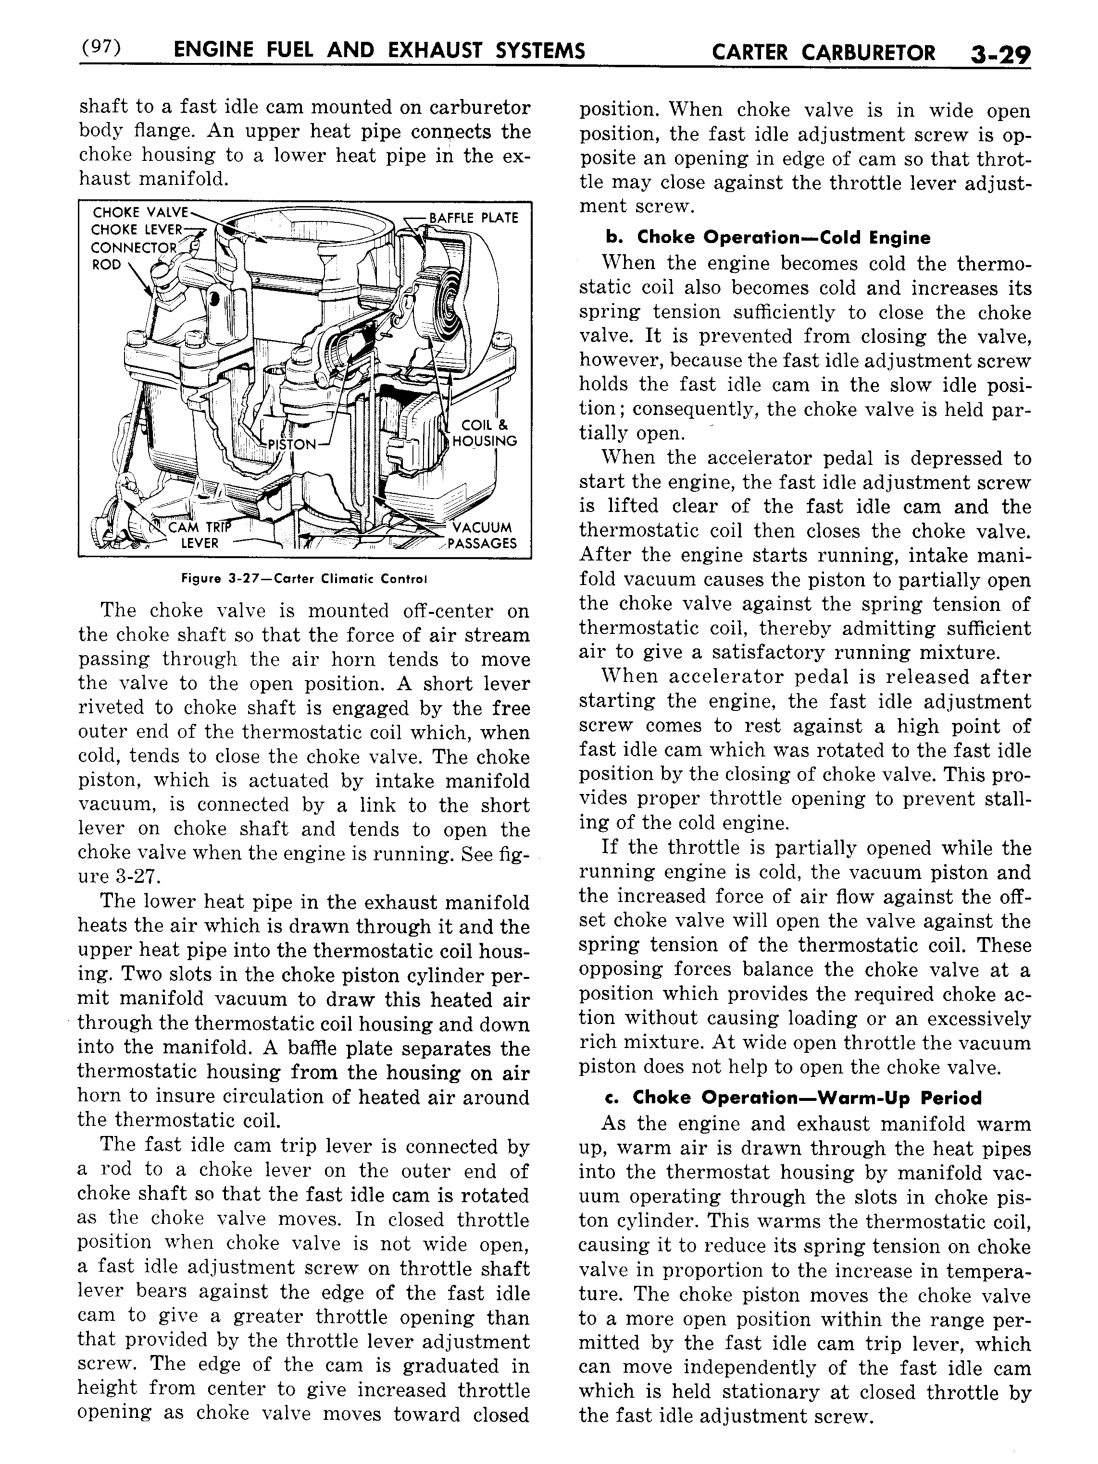 n_04 1951 Buick Shop Manual - Engine Fuel & Exhaust-029-029.jpg